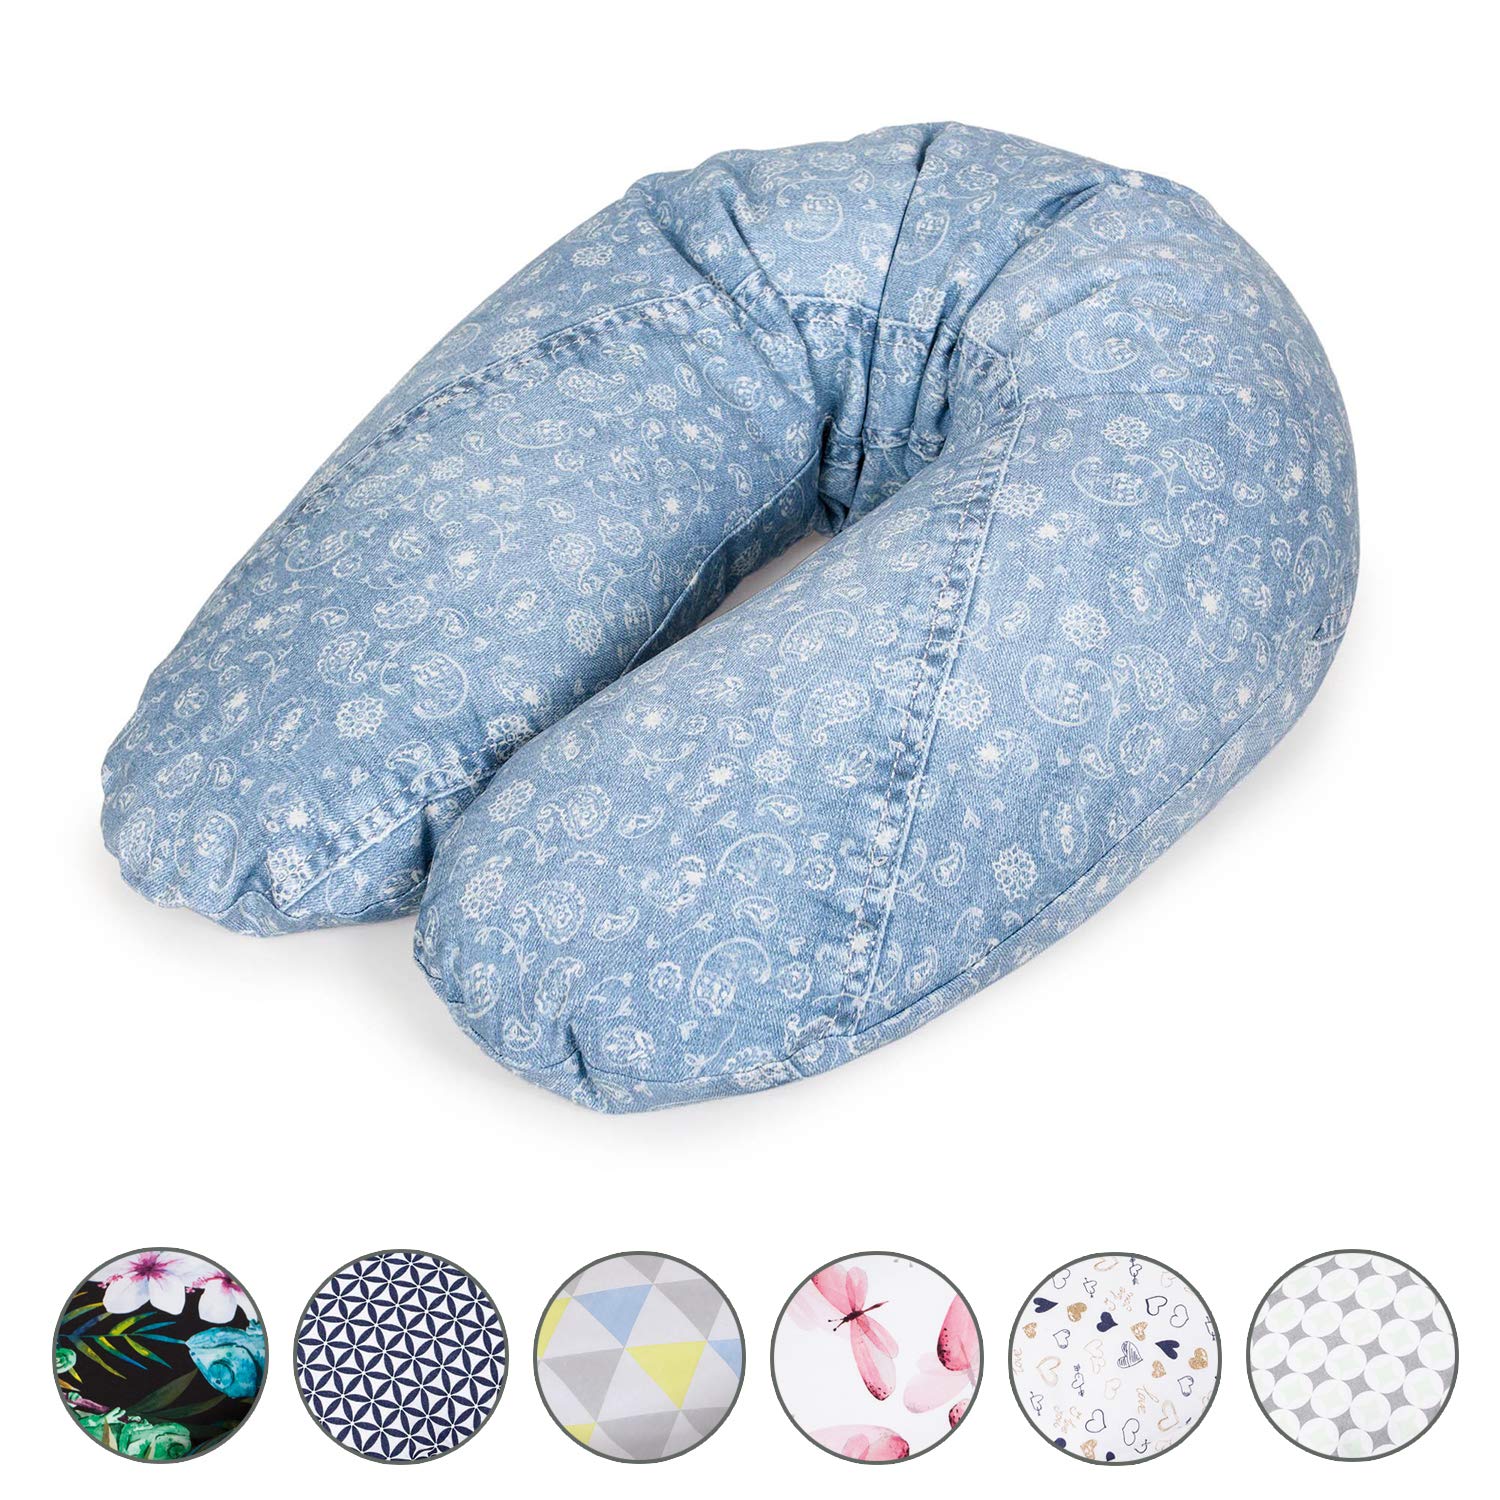 Ceba baby nursing pillow - 100 % cotton maternity pillow with EPS micro beads - certified according to Oeko-Tex Standard 100 - anti-allergic, child safe, comfortable - length 190 cm, multi Denim style boho